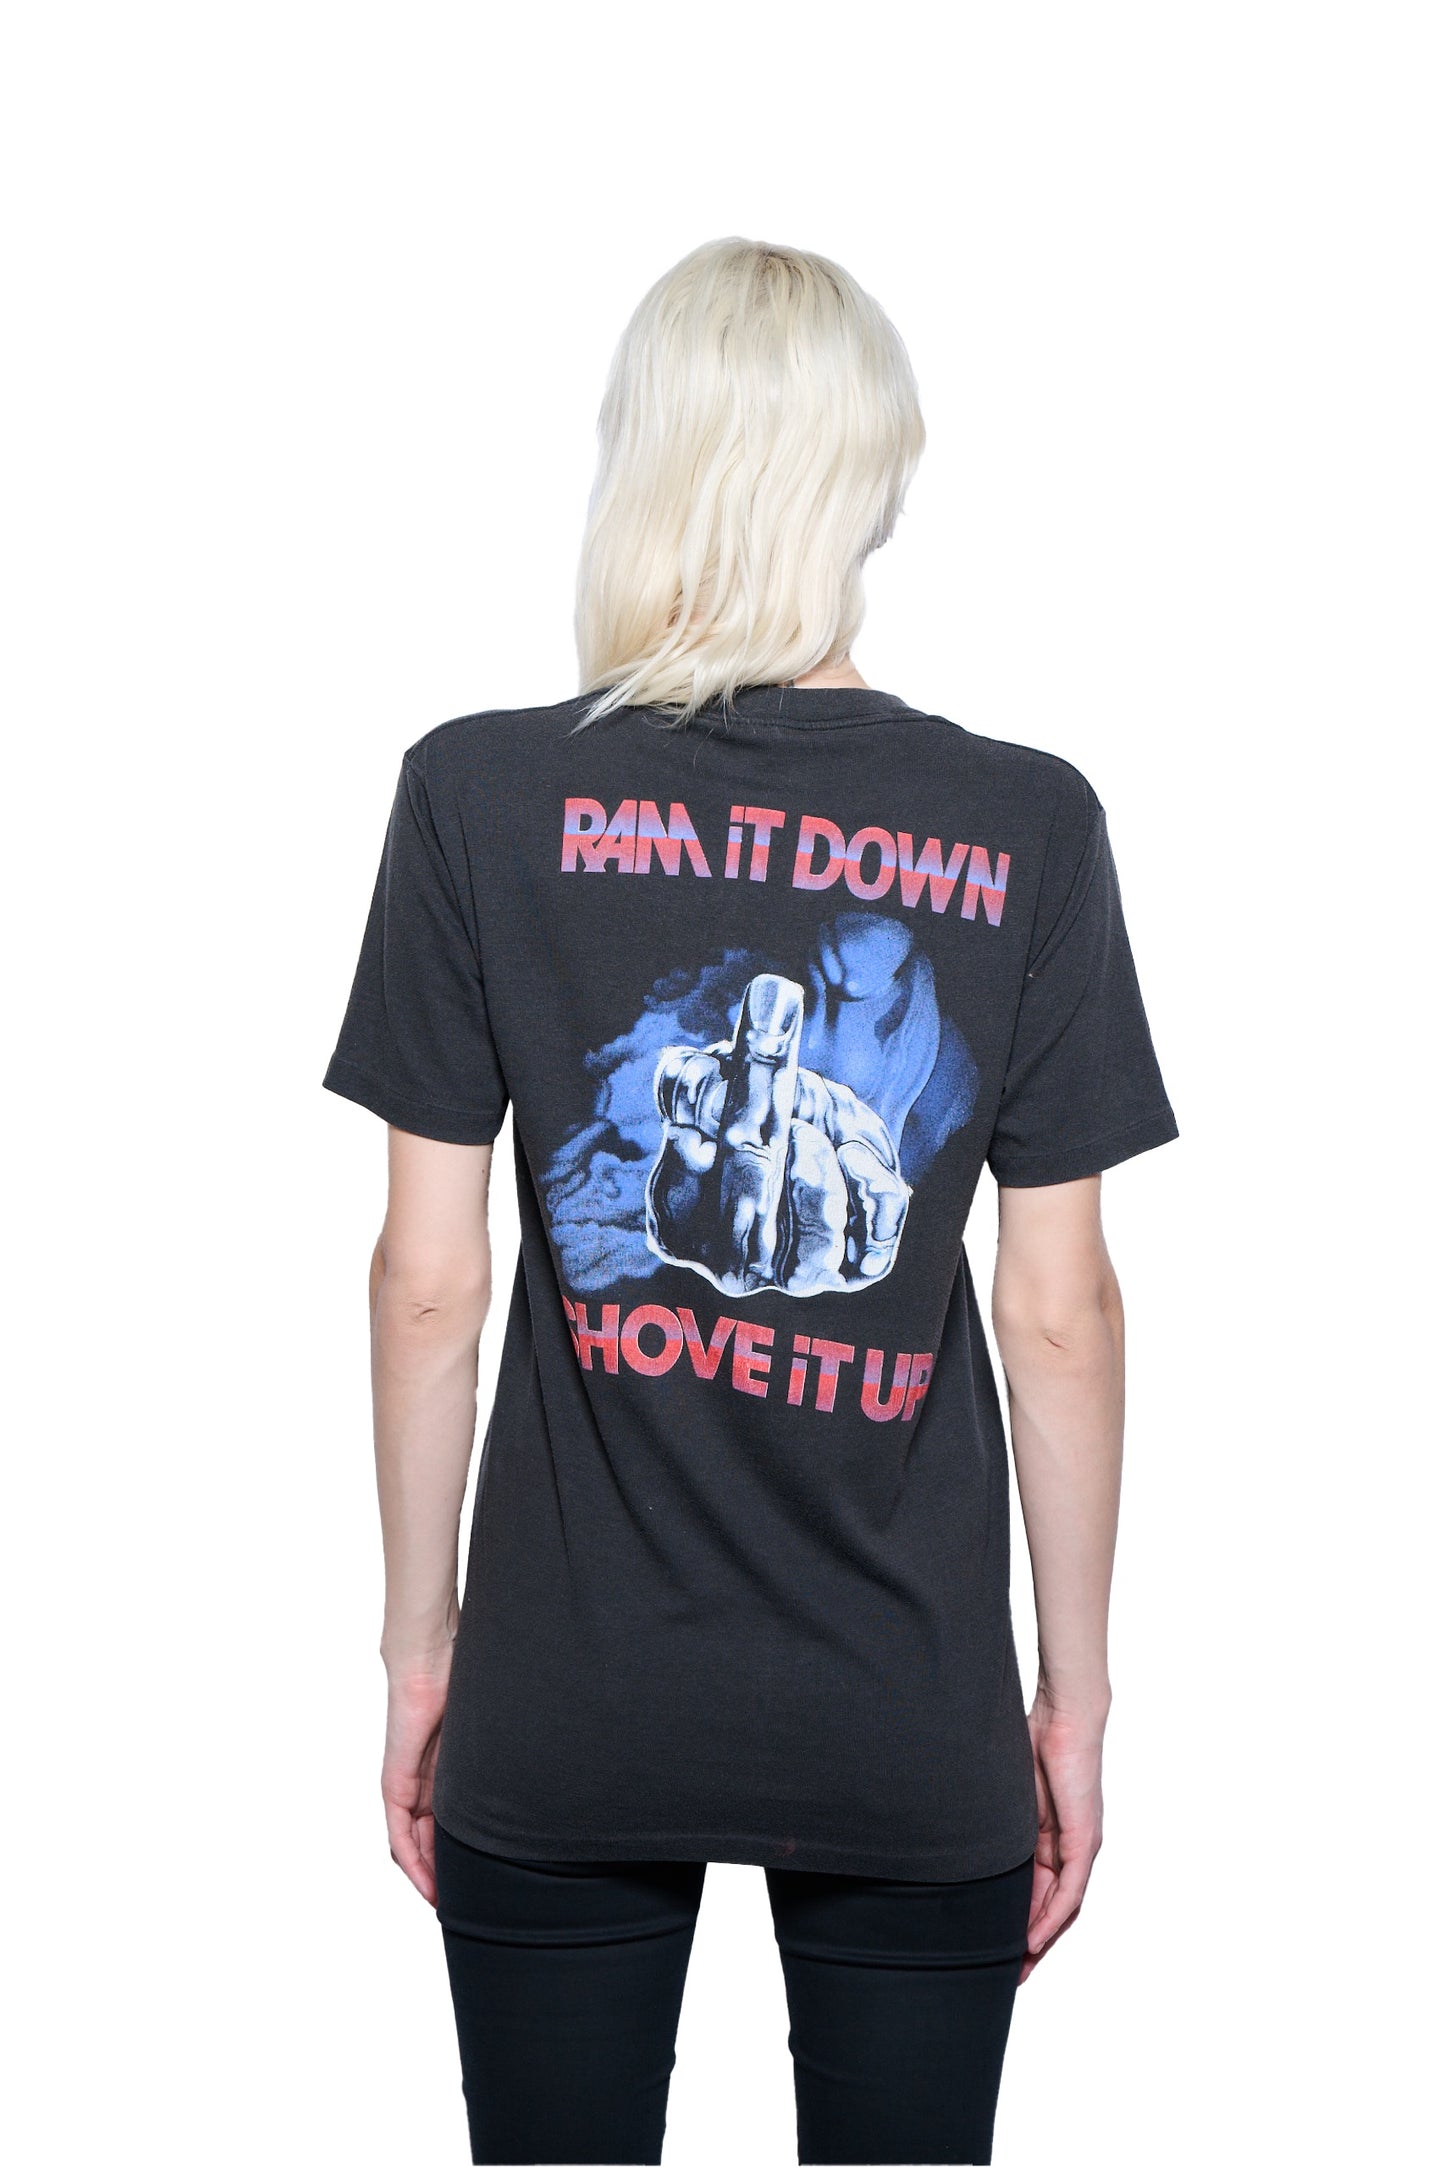 Vintage 1980's Judas Priest Tour T-Shirt